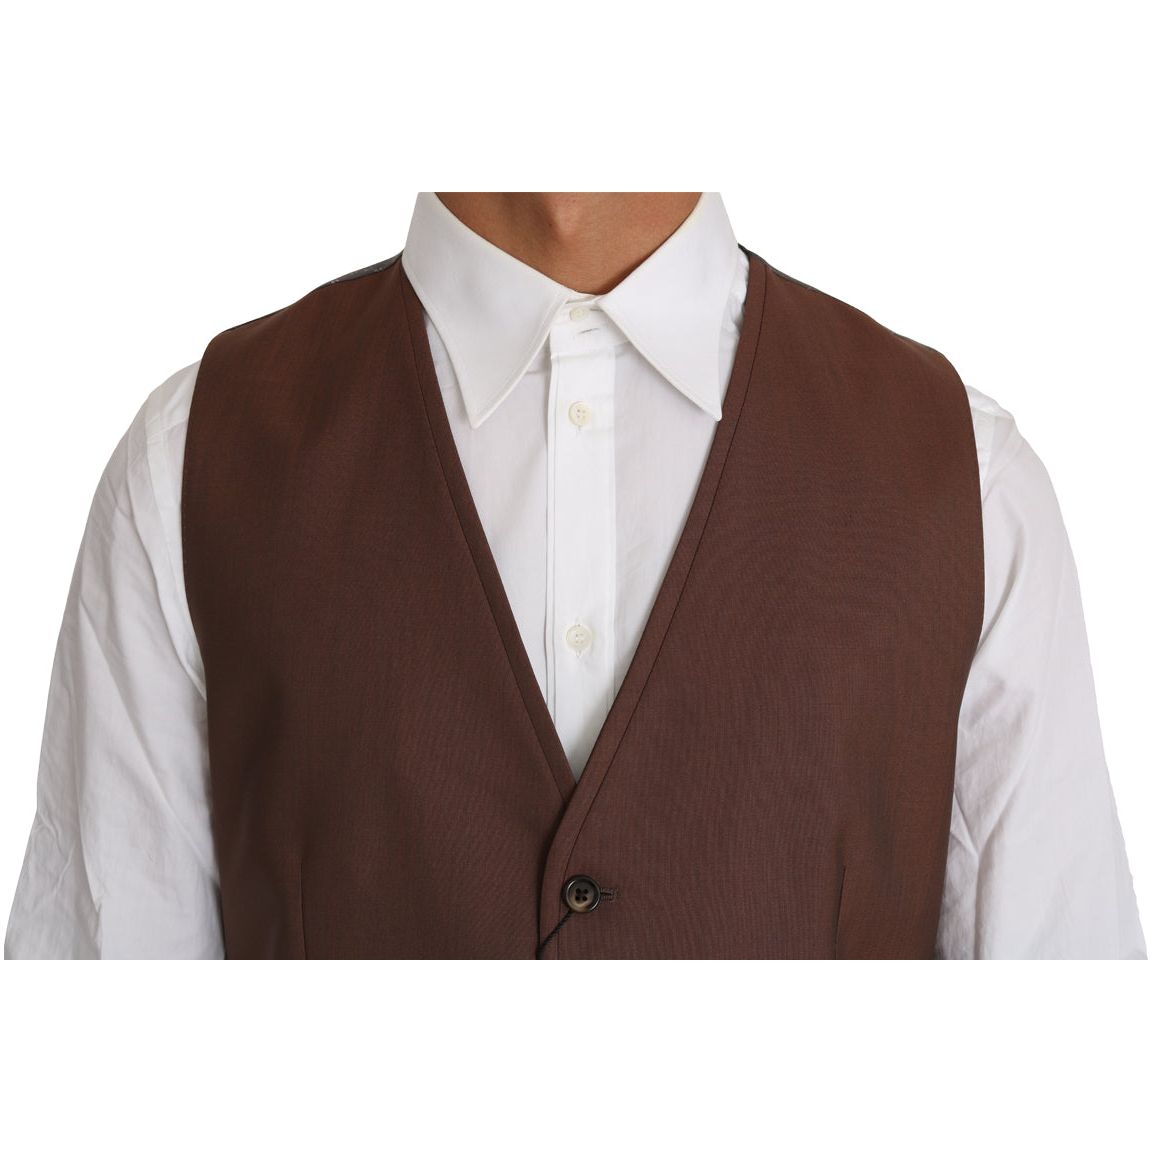 Dolce & Gabbana Sleek Bronze & Gray Formal Vest Slim Fit brown-wool-silk-waistcoat-vest a-1689.jpg